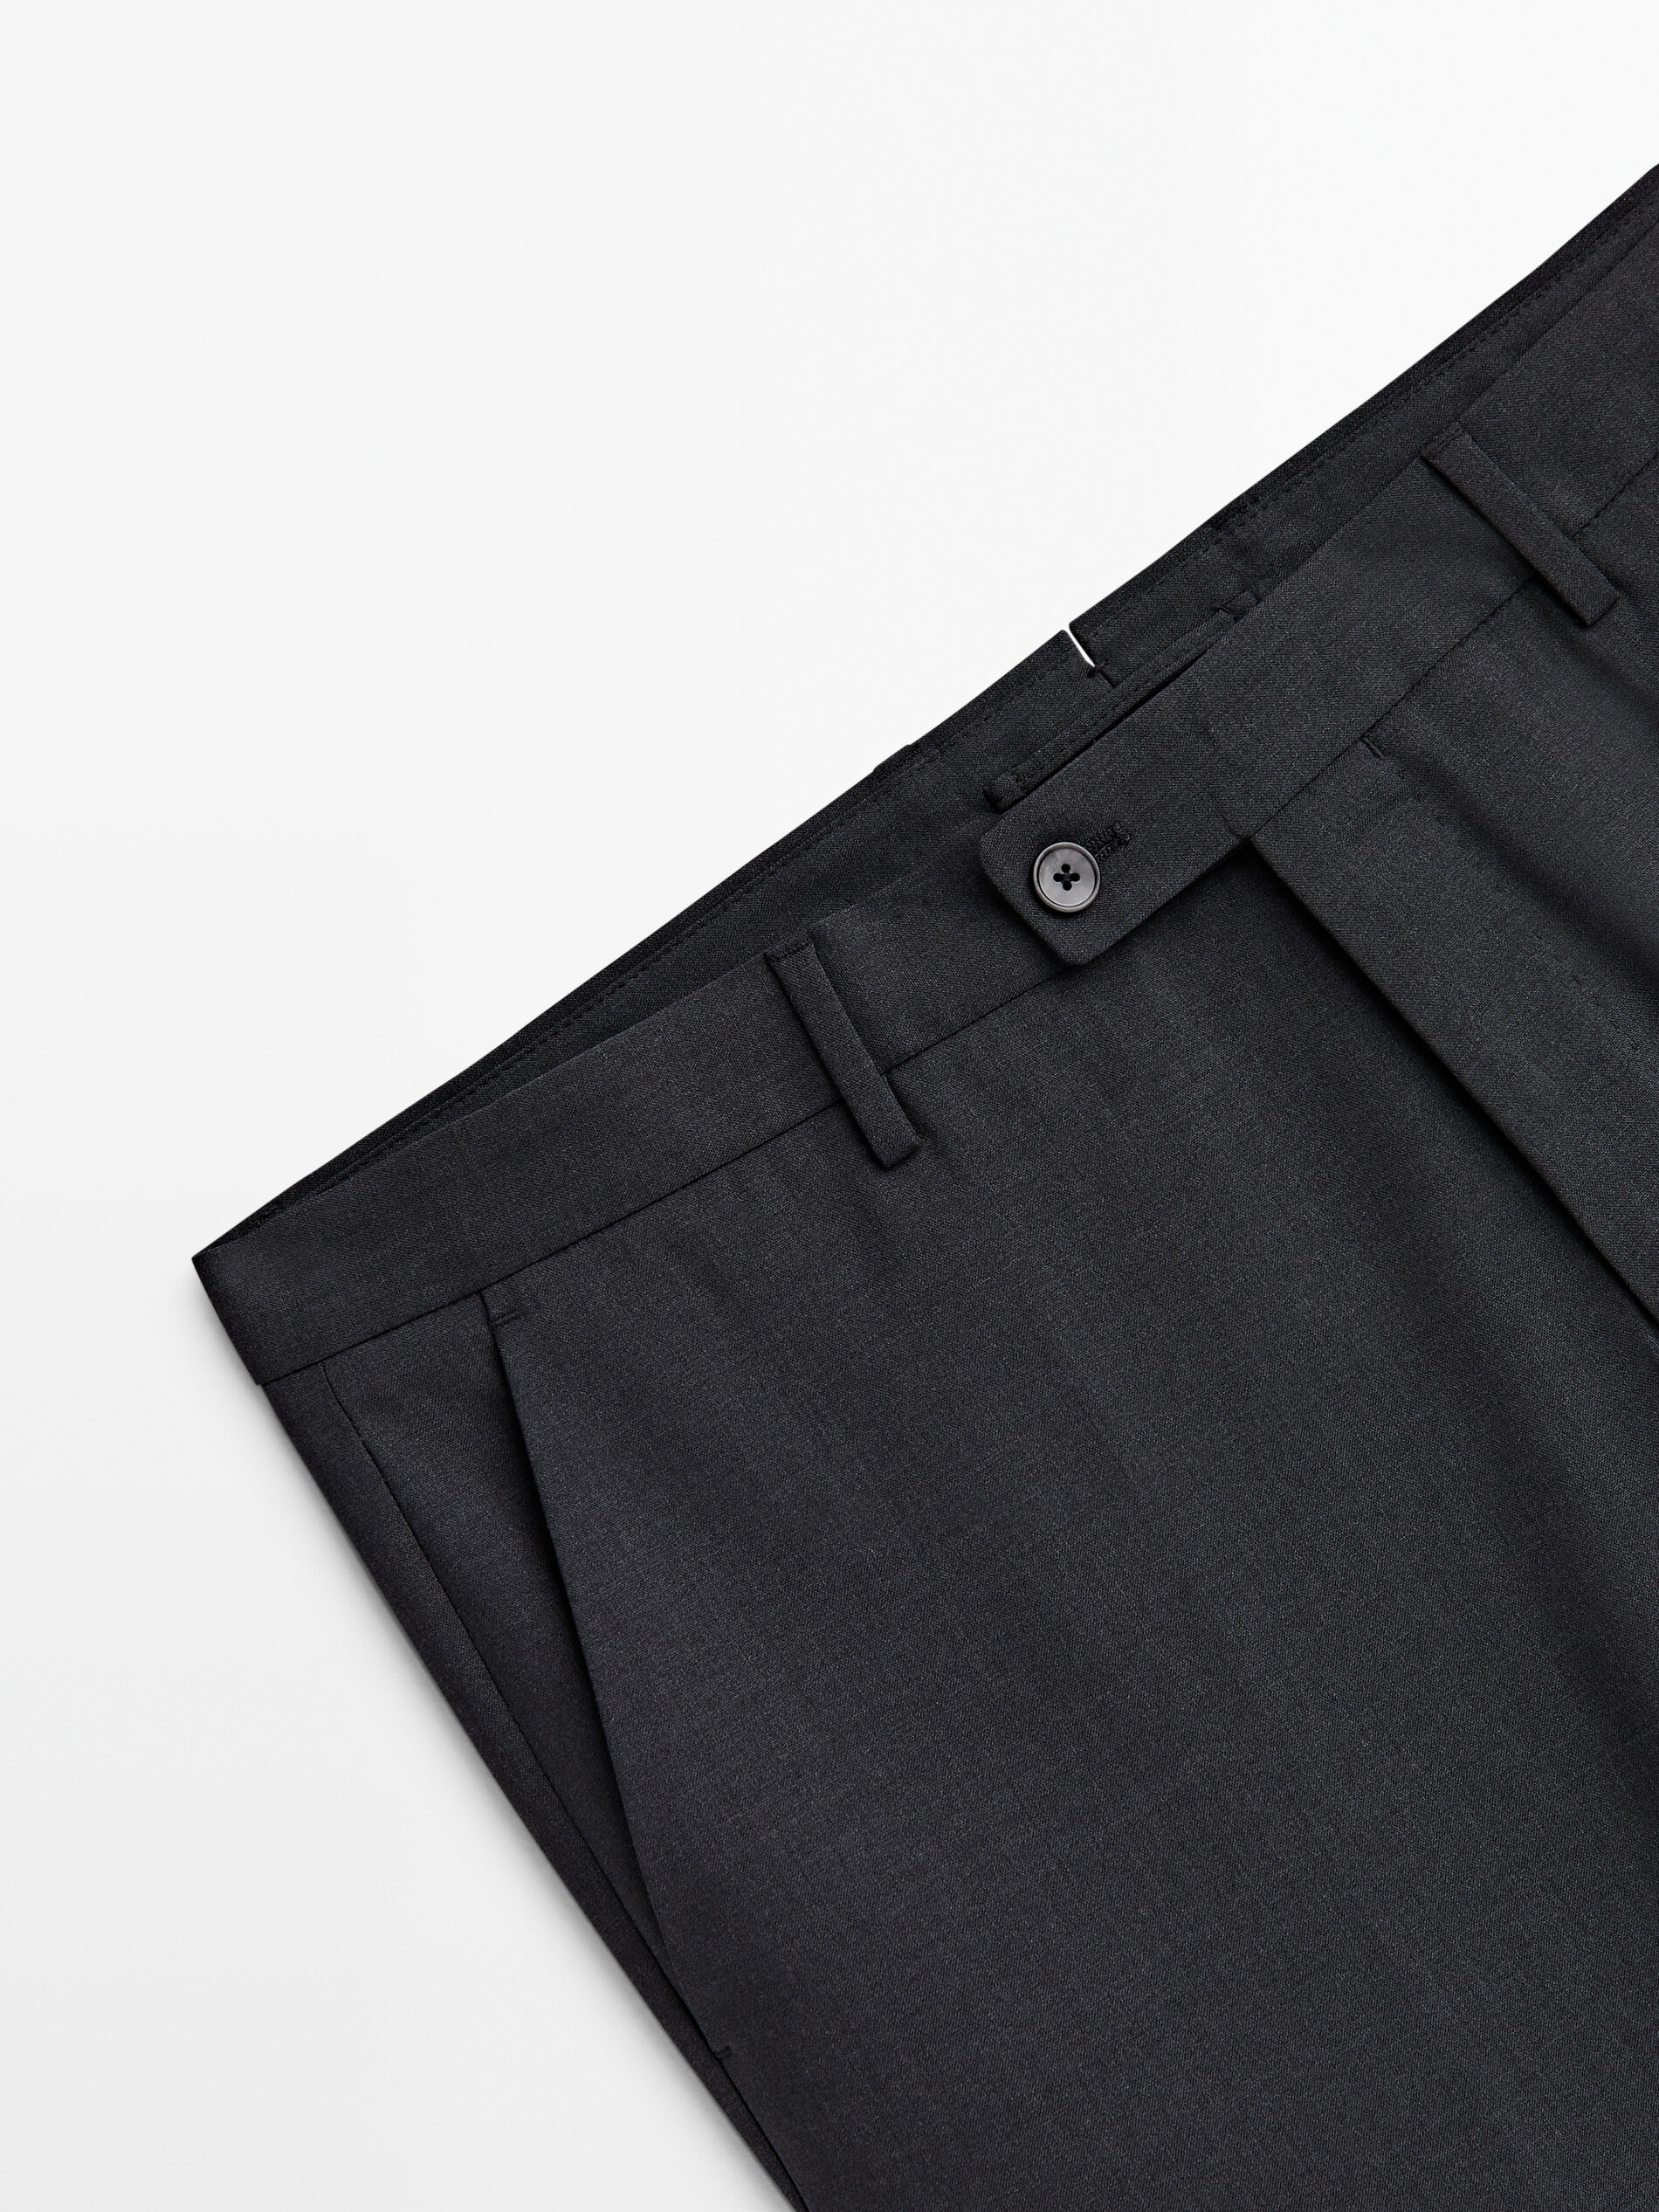 Heritage Blended Wool Dress Pants - Black – Bombay Shirt Company